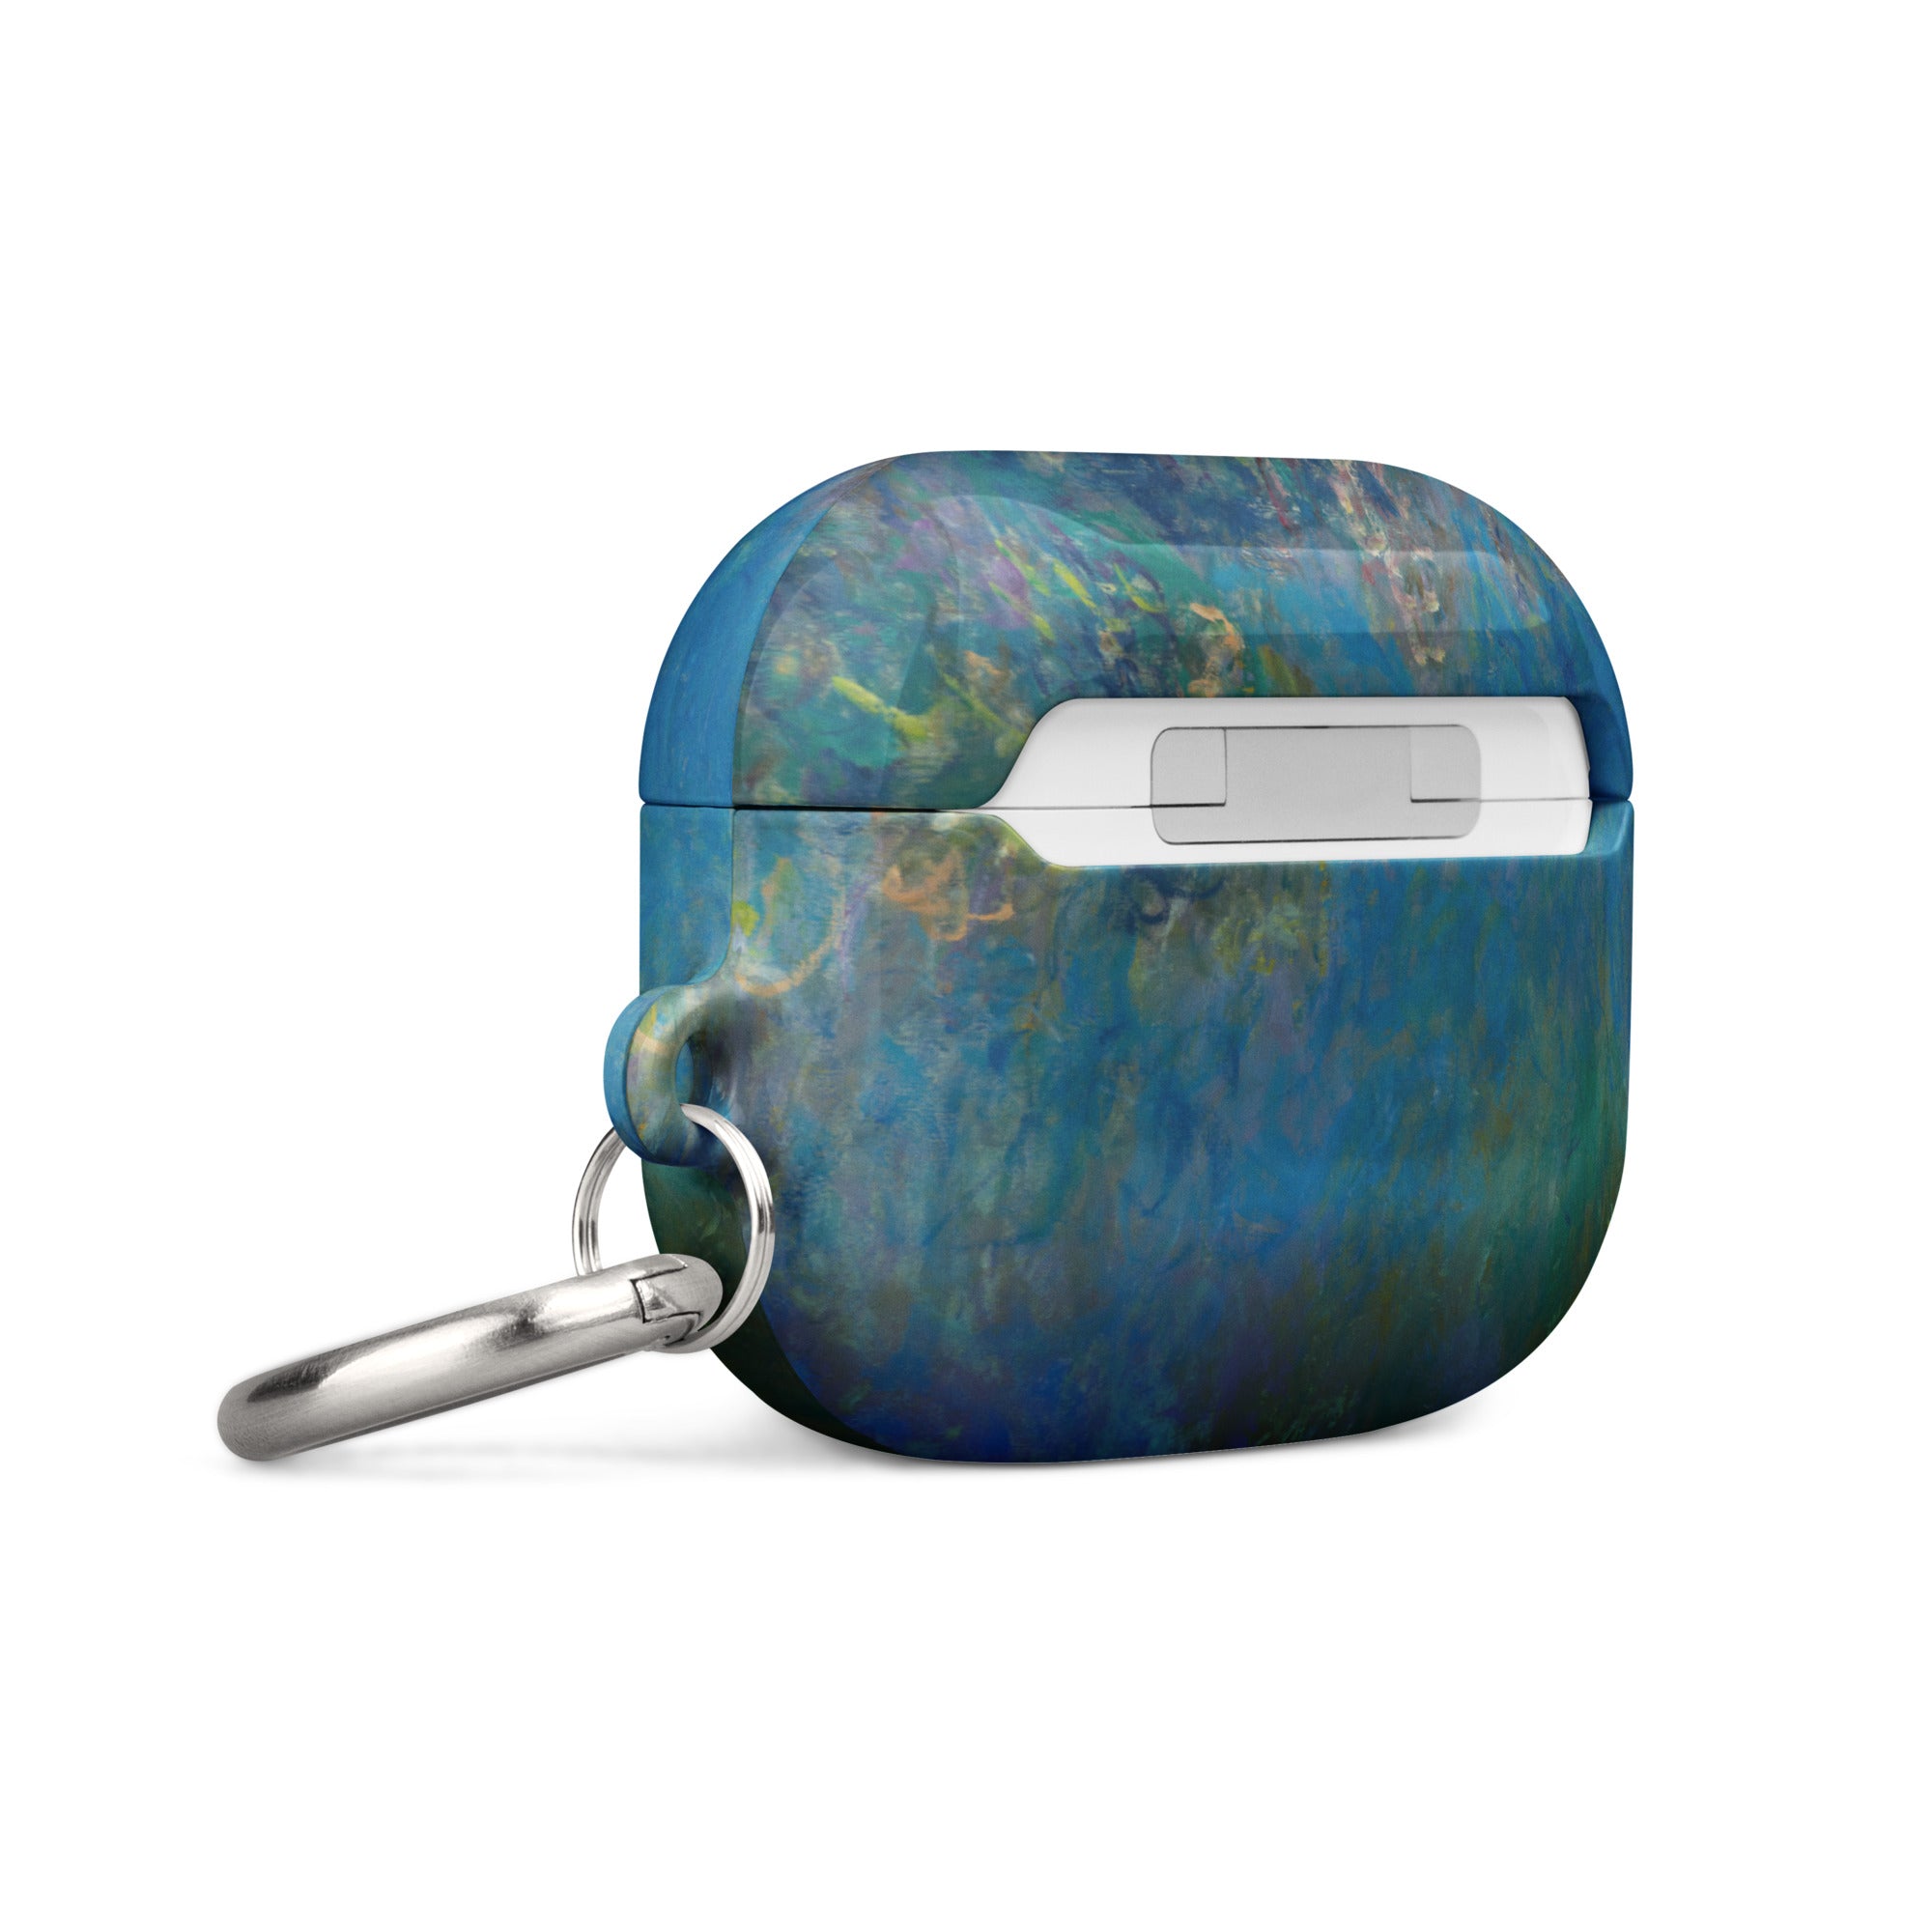 Claude Monet „Wisteria“ – berühmtes Gemälde – AirPods®-Hülle | Premium-Kunsthülle für AirPods®